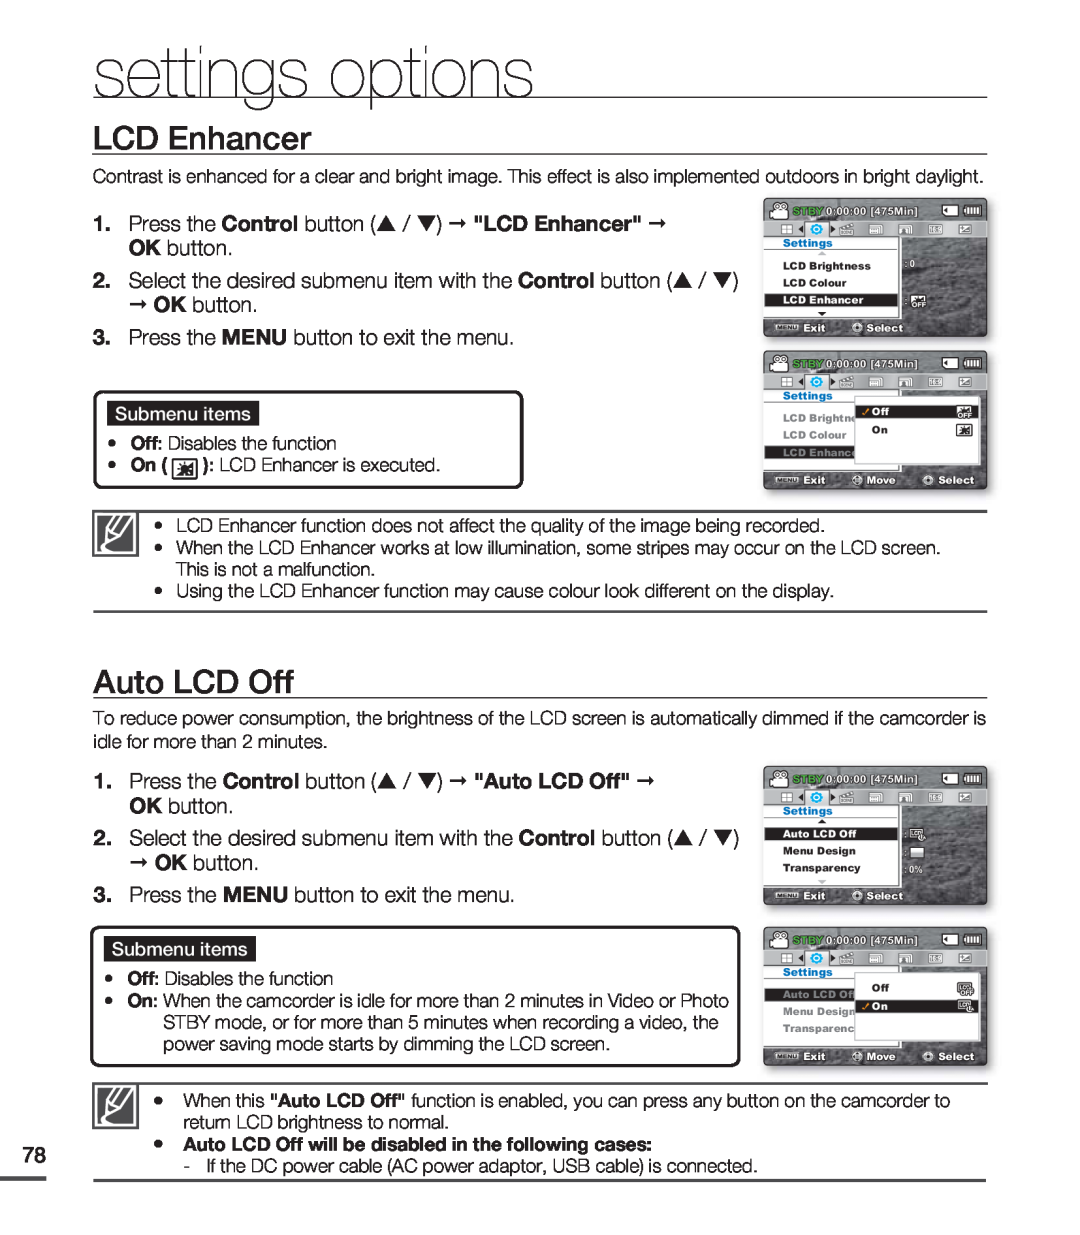 Samsung SMX-C20BP/EDC Auto LCD Off, Press the Control button / LCD Enhancer OK button, settings options, Submenu items 